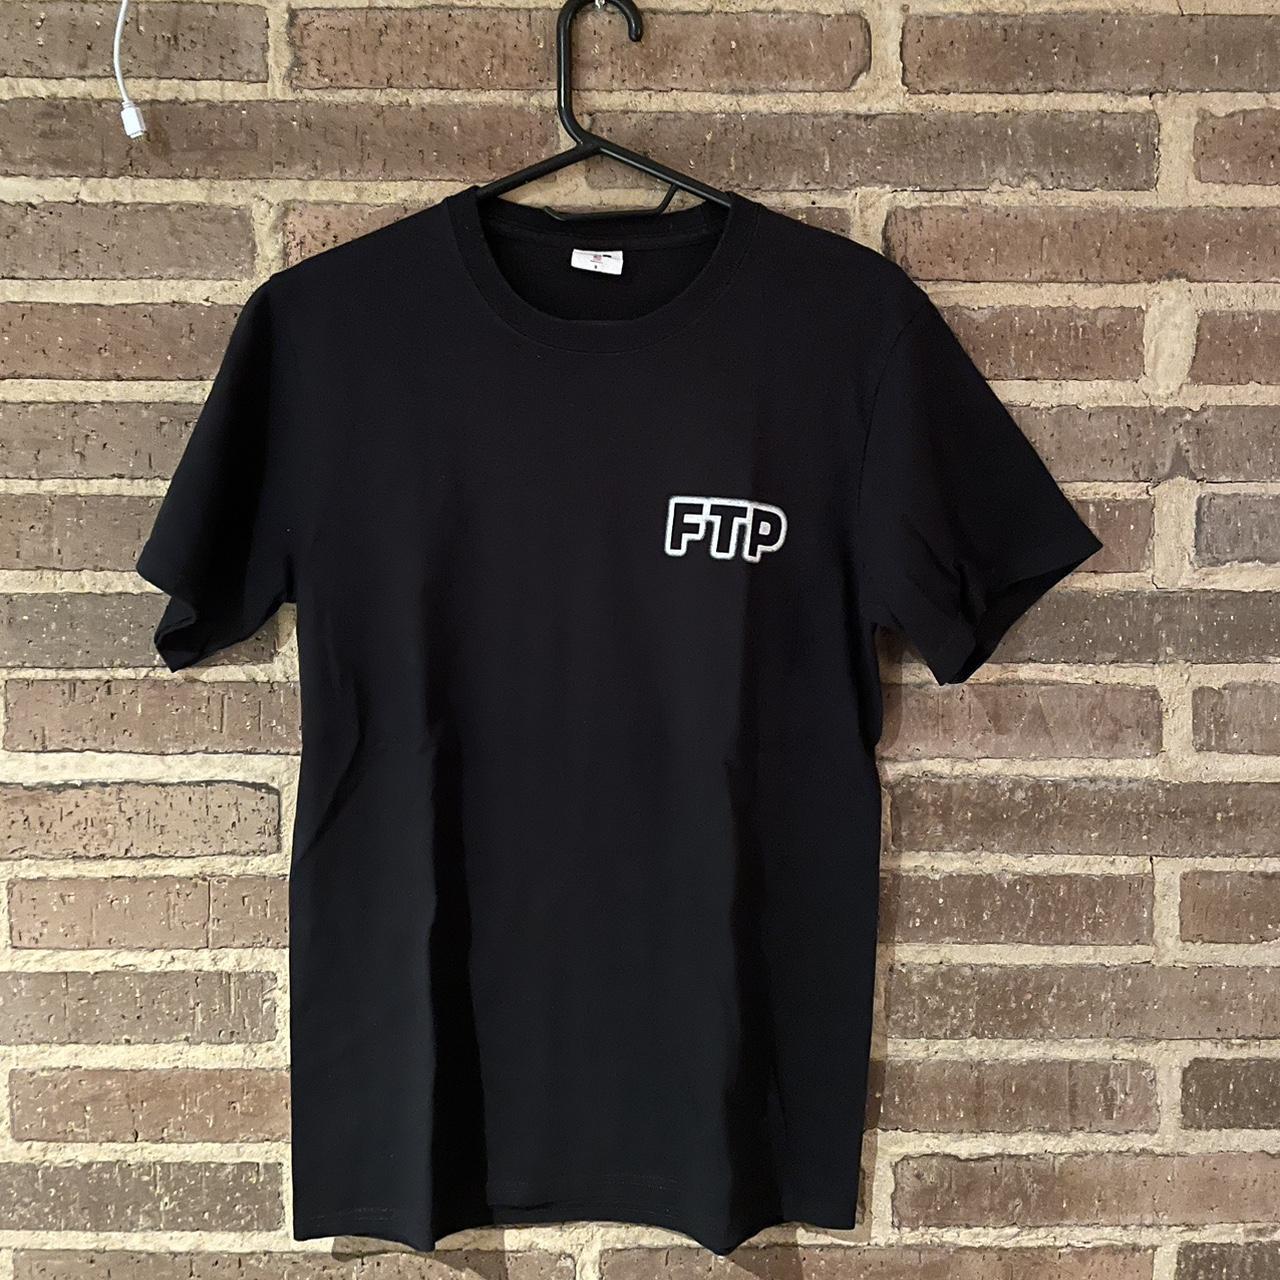 FTP Men's Black T-shirt